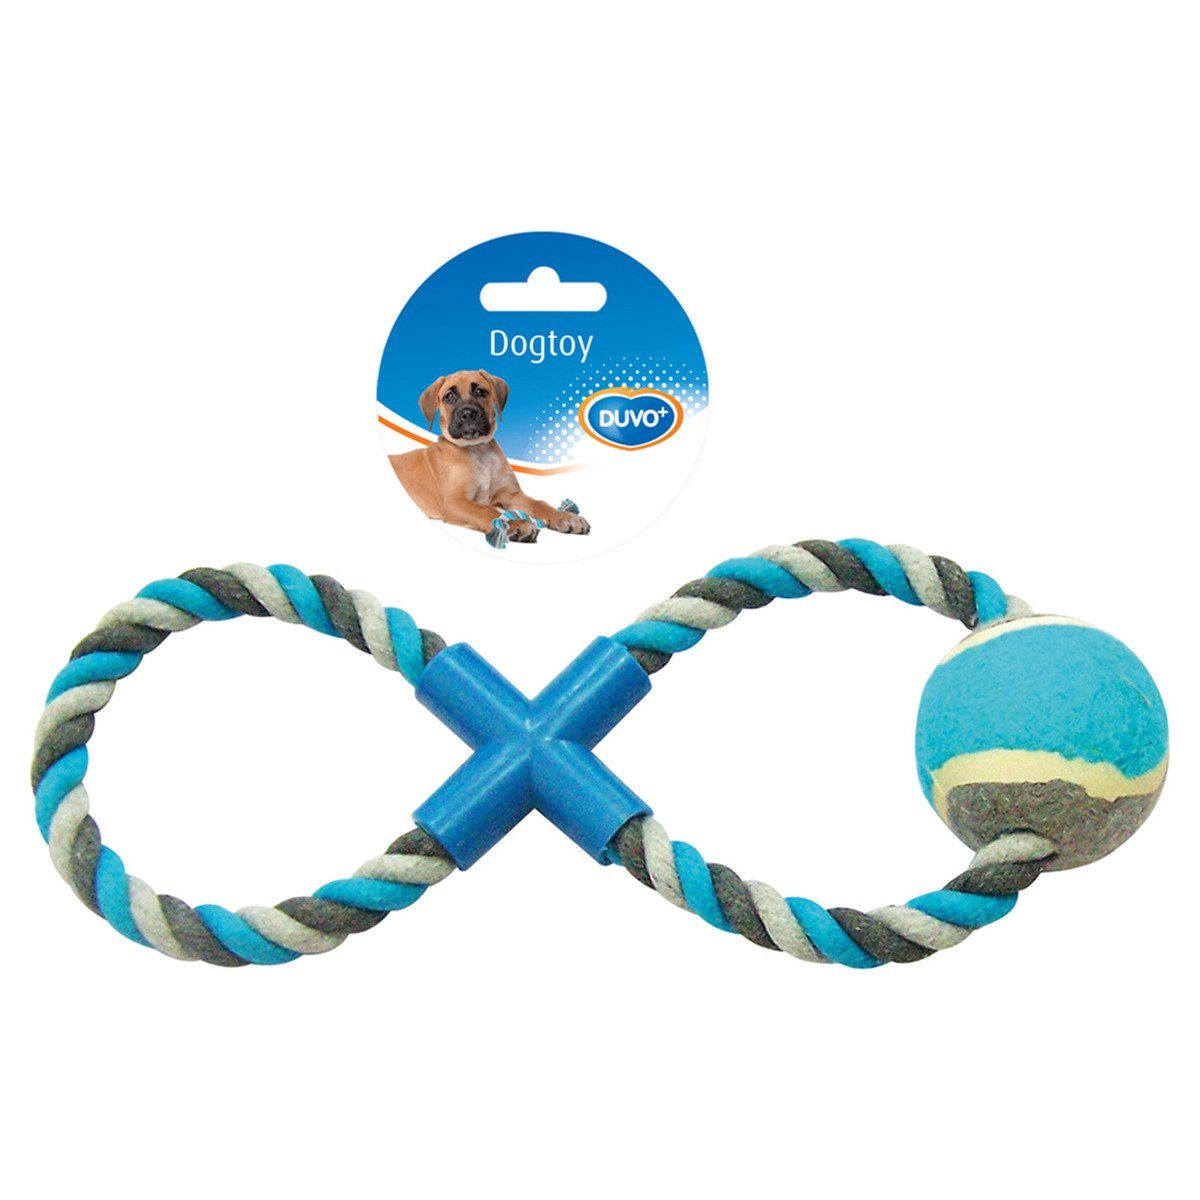 8-Ring Baumwolle Knot grau/blau Tennisball Spielball DUVO+ + Hundespielzeug